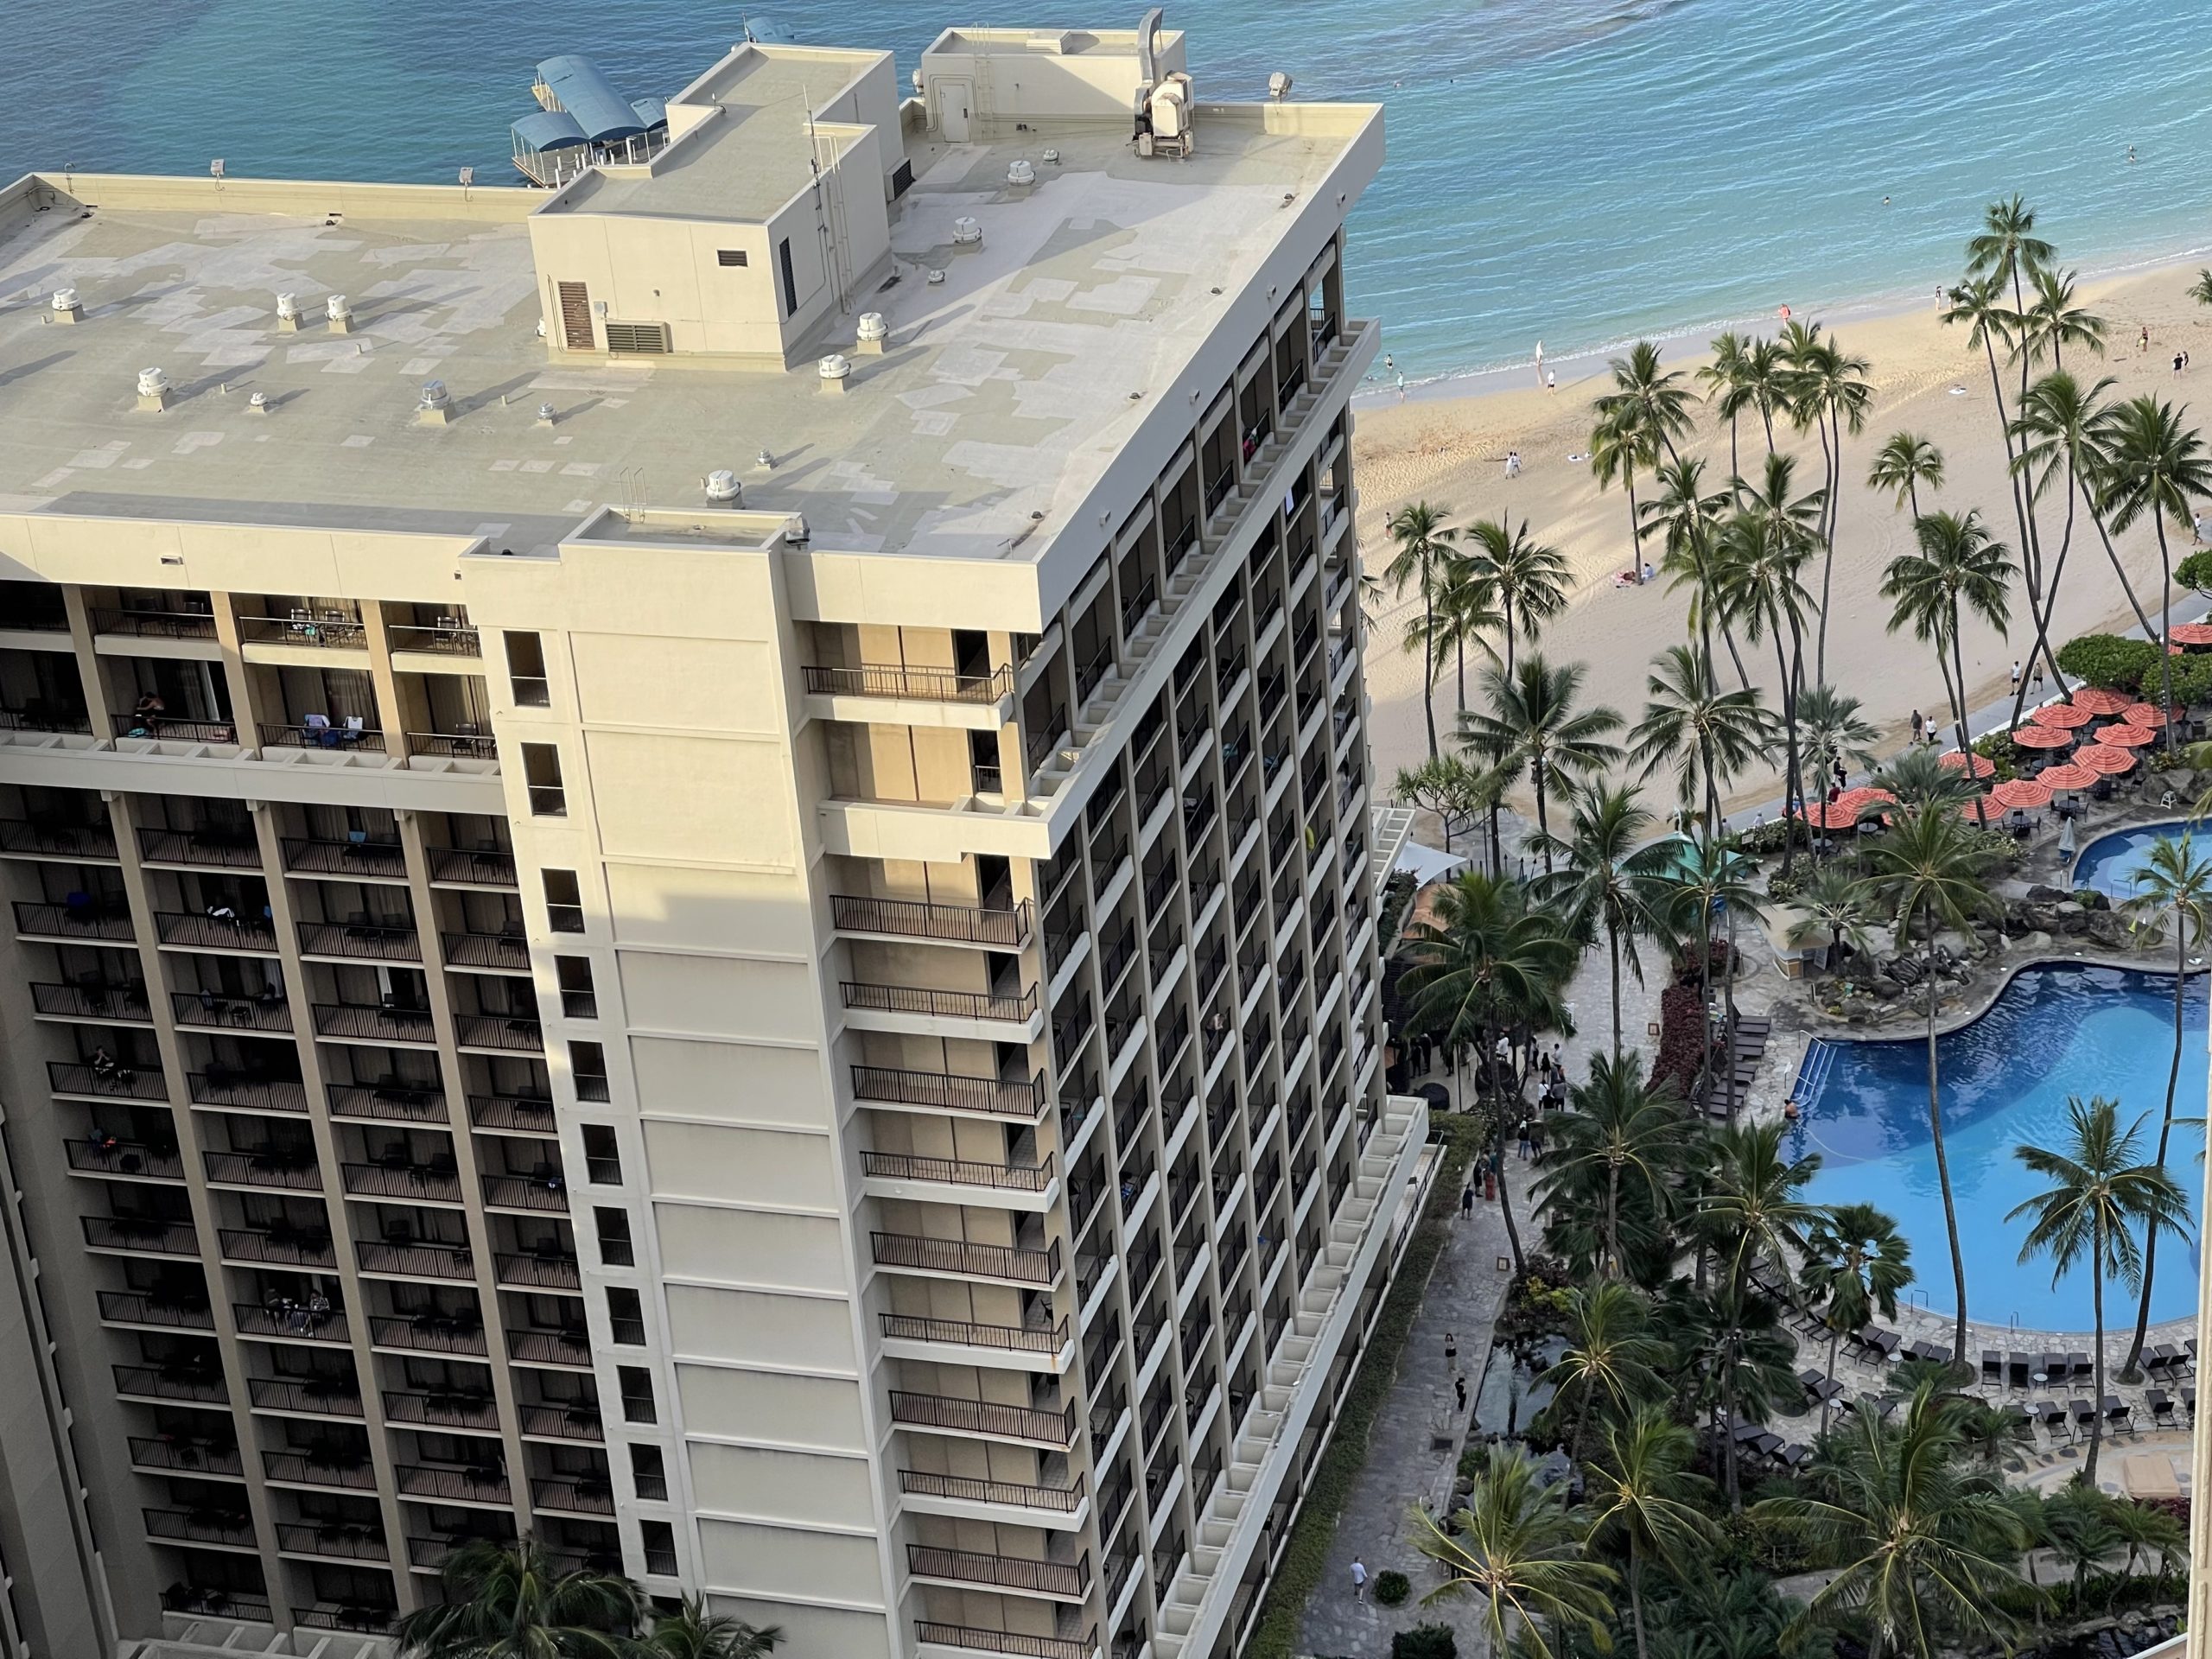 Hilton Hawaiian Village Waikiki Beach Resort Review: What To